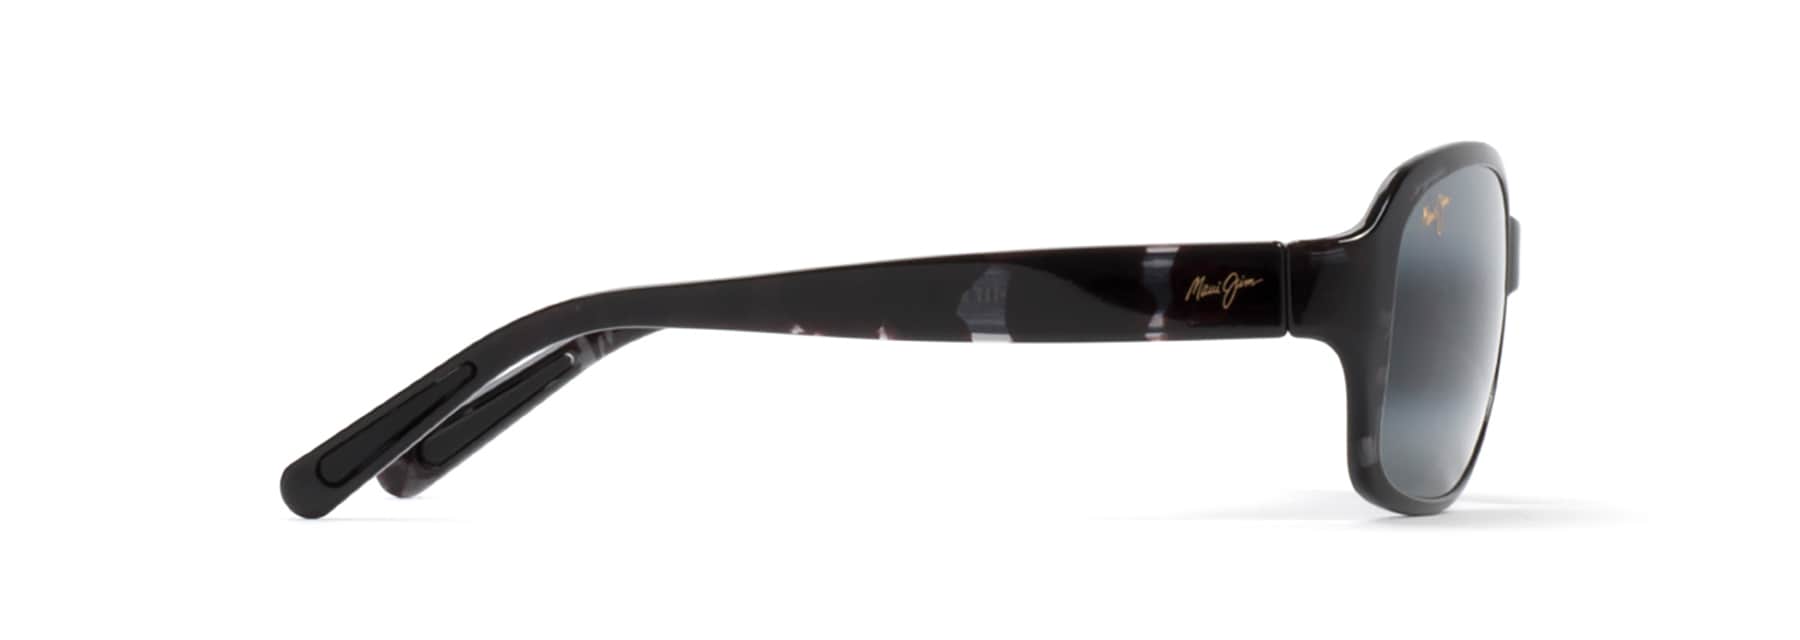 Koki Beach Asian Fit Polarized Sunglasses | Maui Jim®